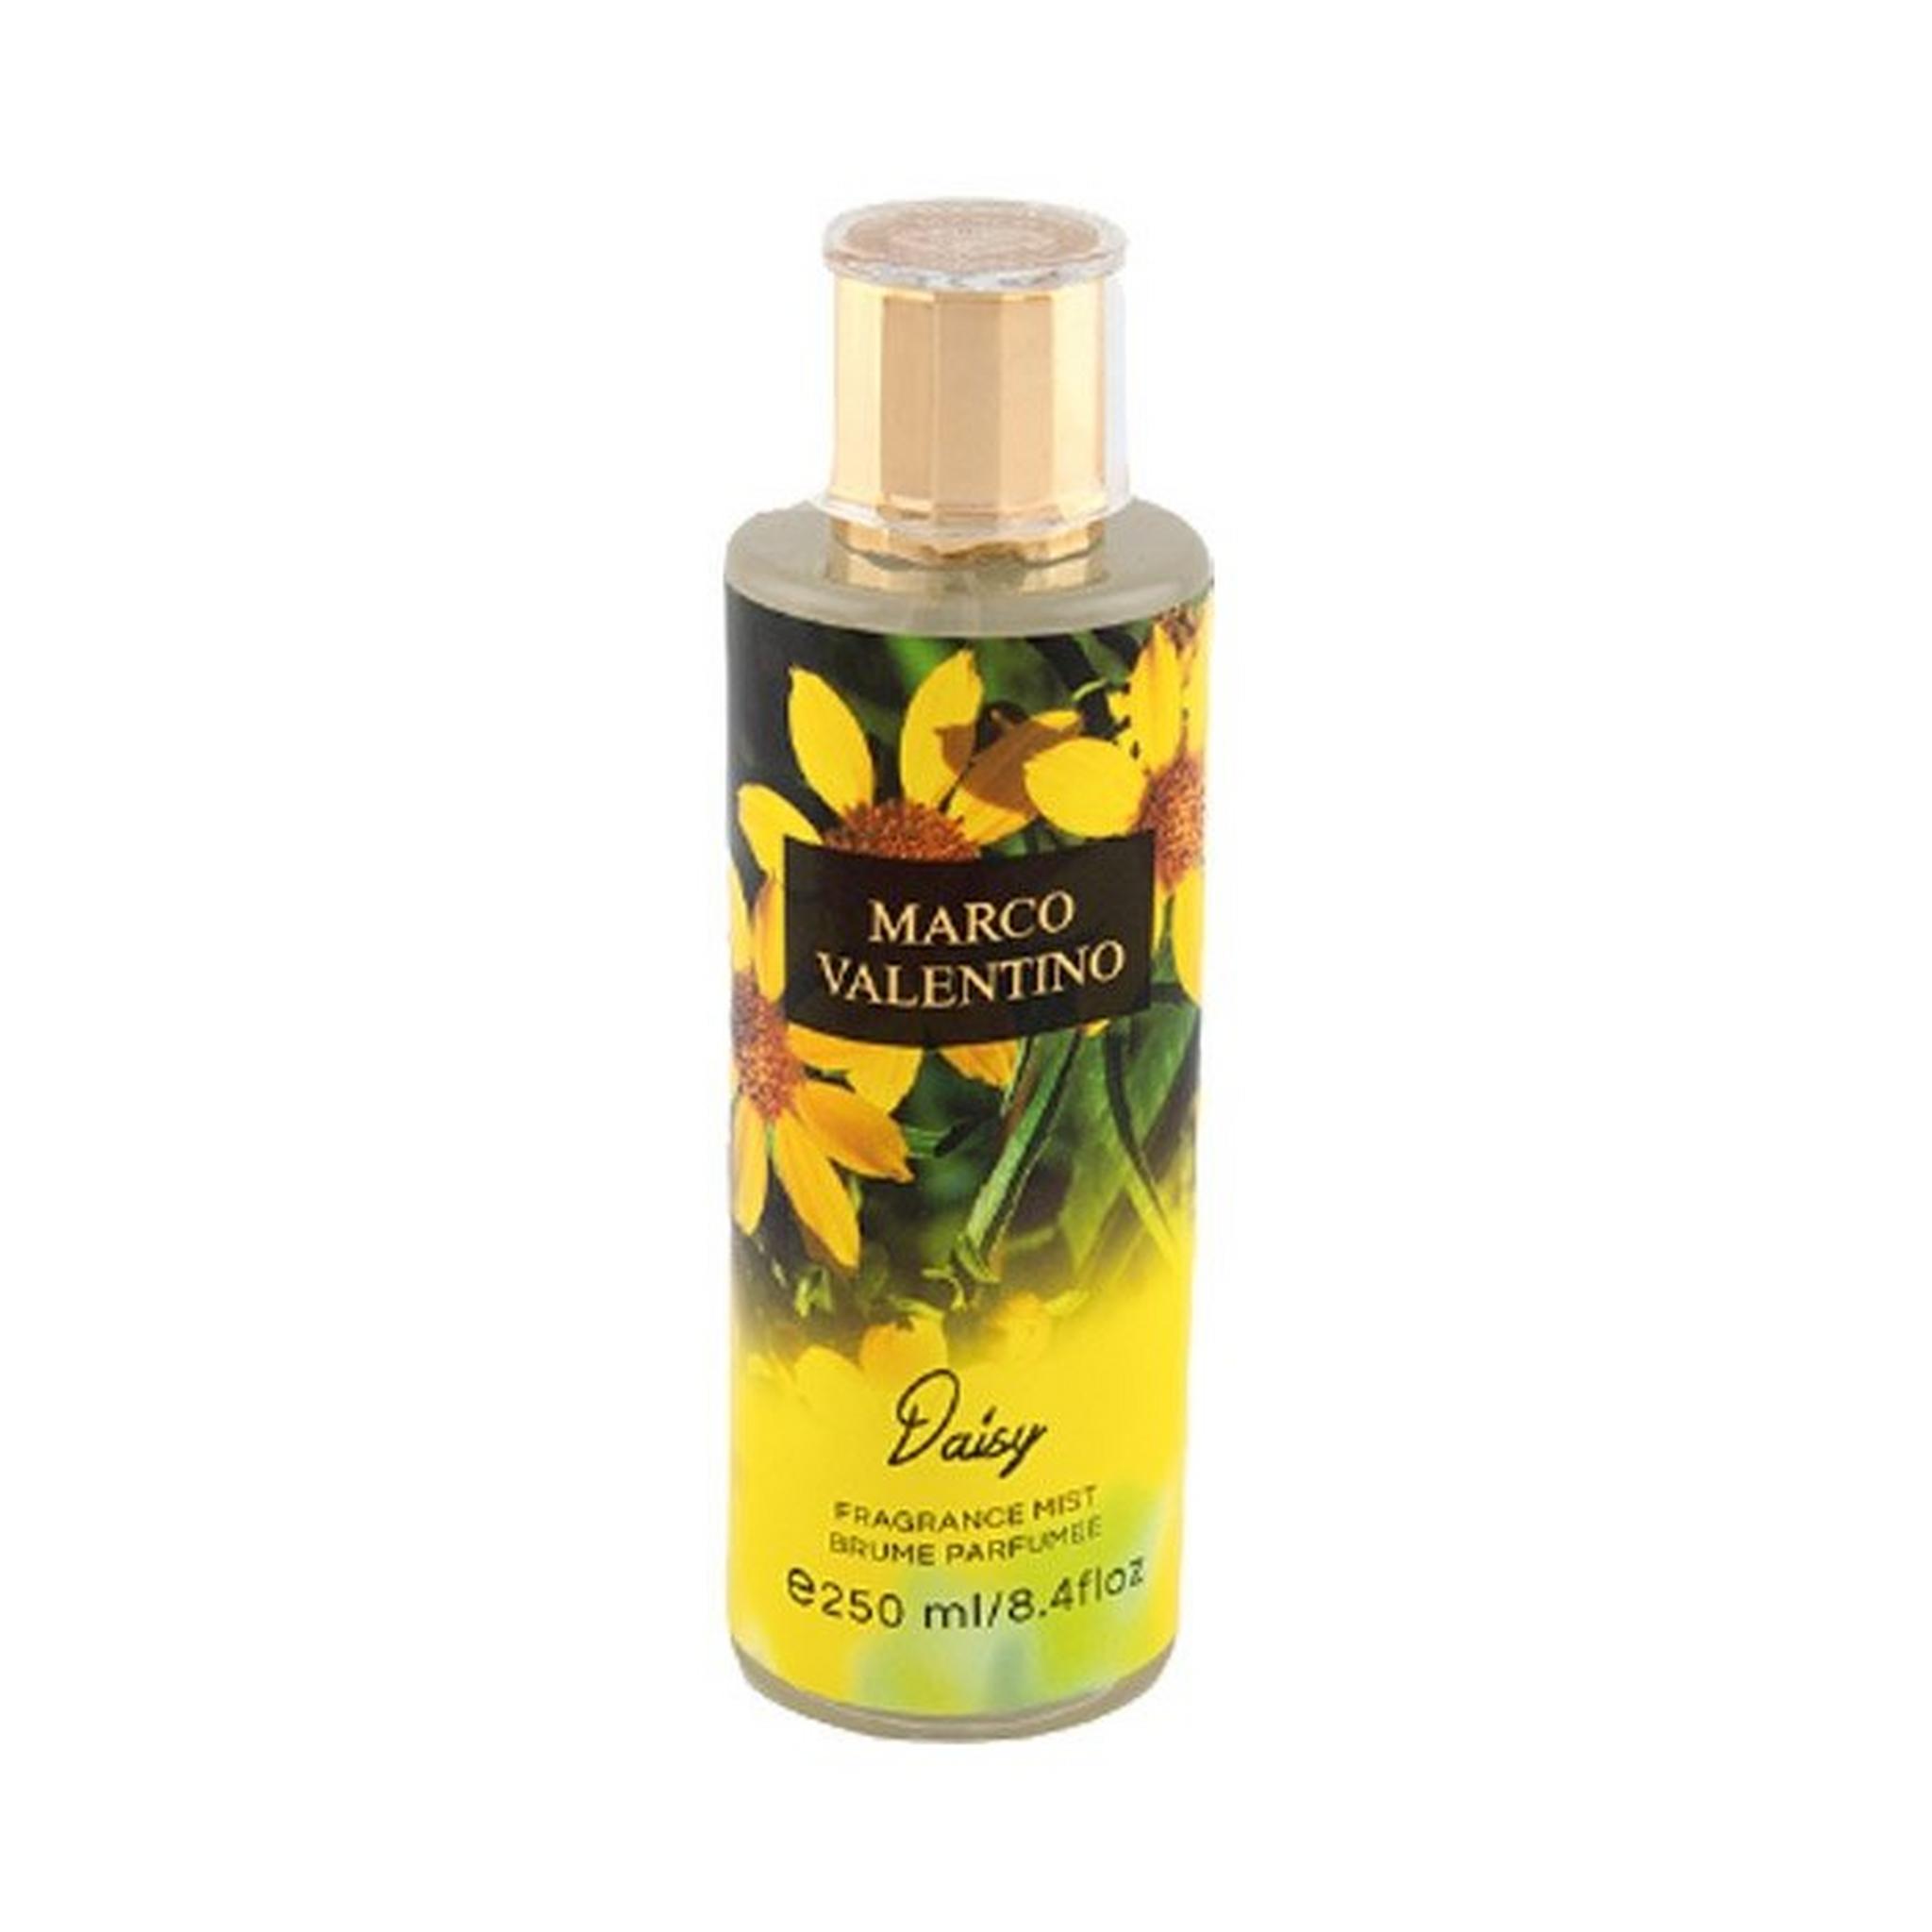 MARCO VALENTINO Daisy - Body Mist 250 ml